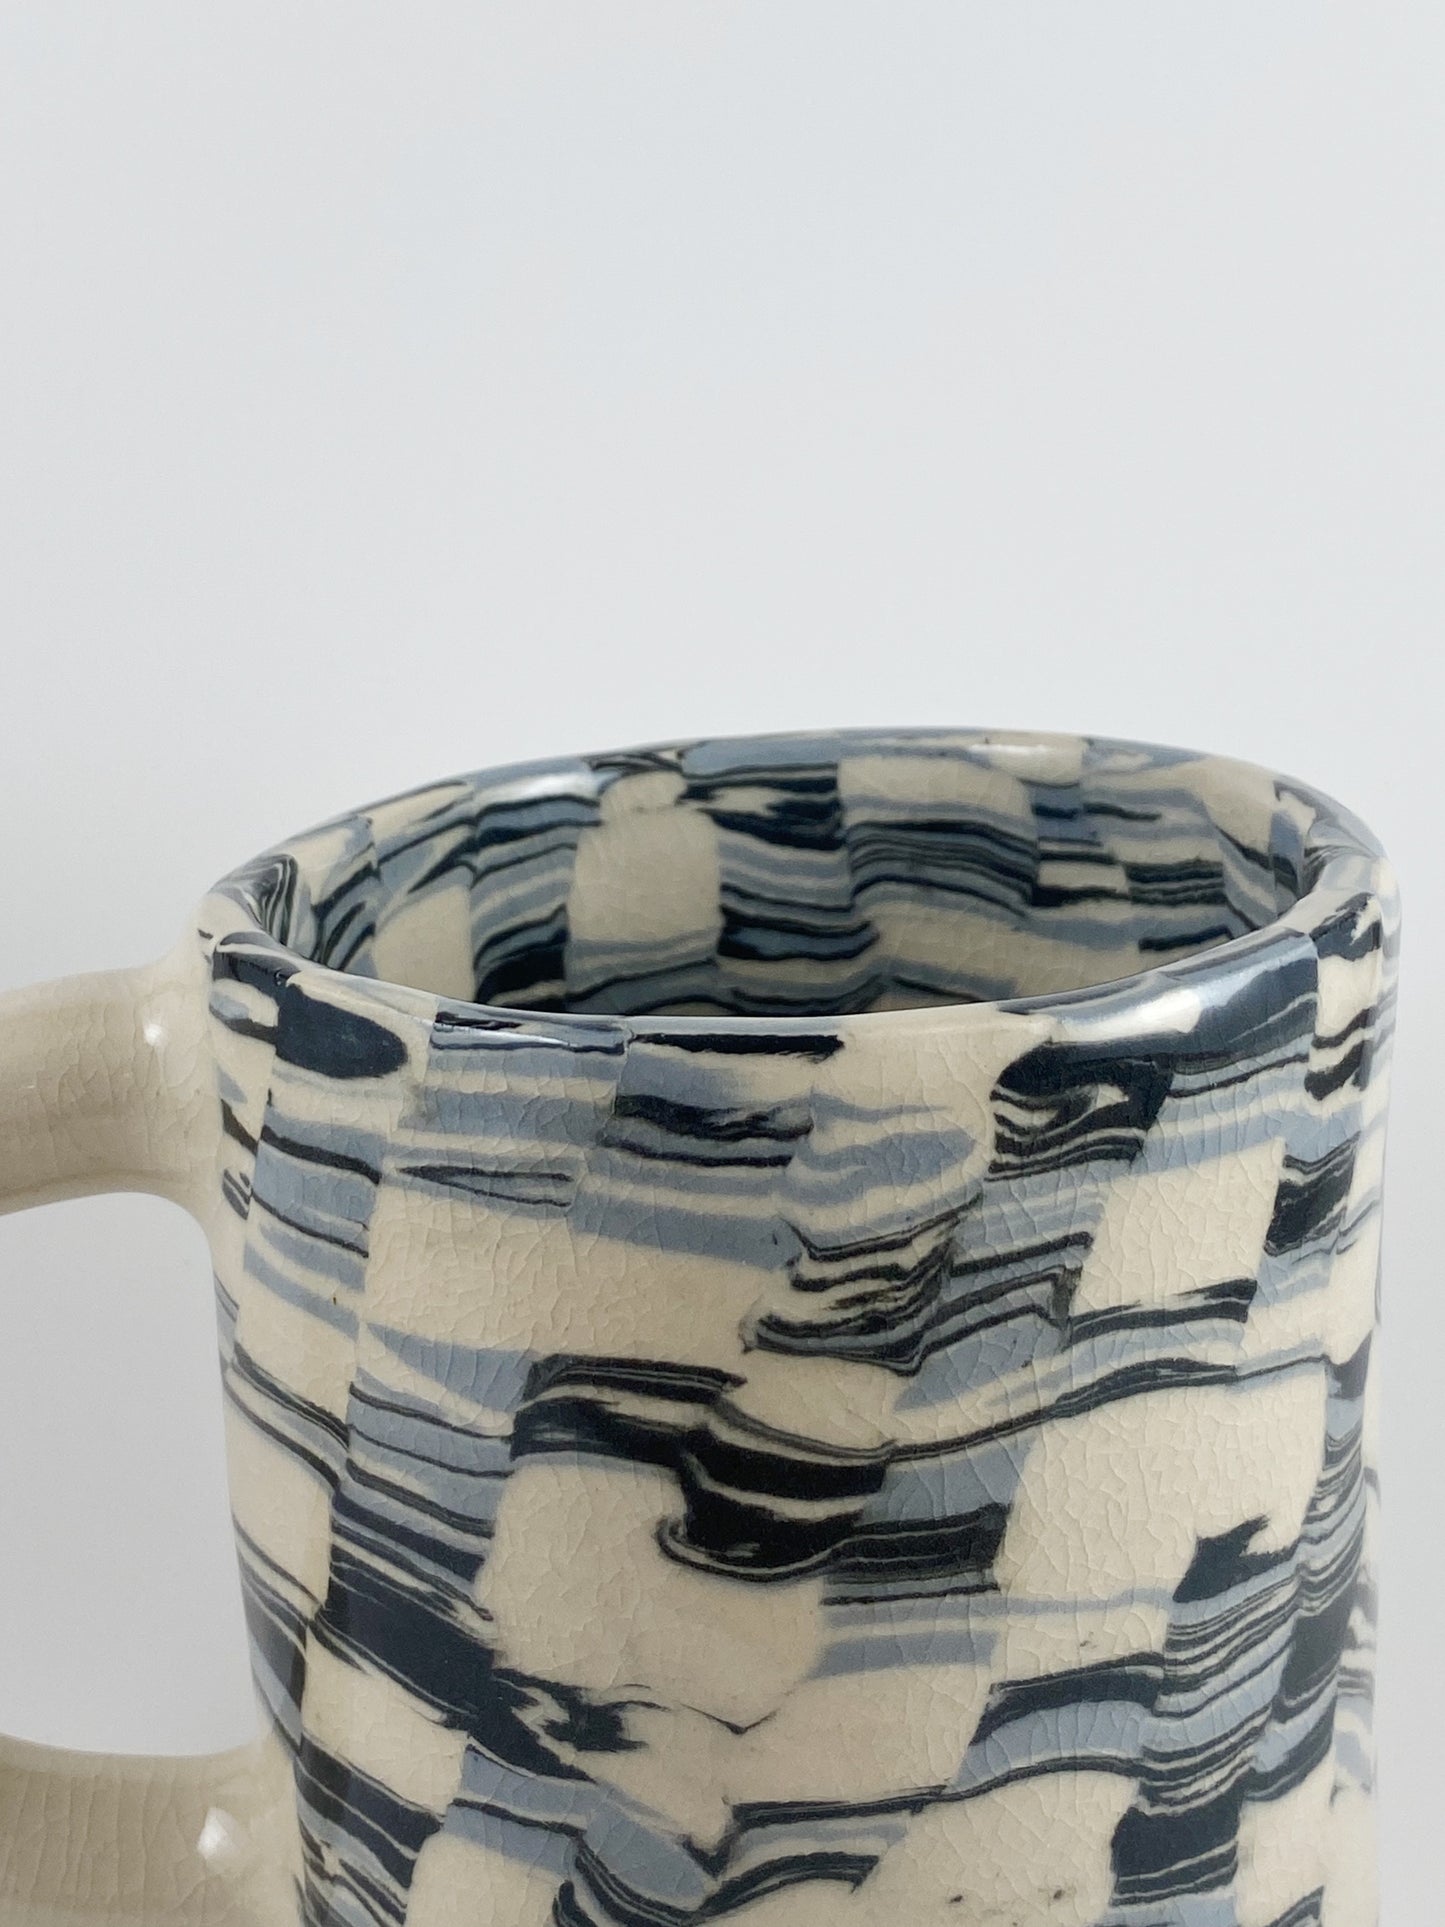 Soft Checkered Mug - Blue/Black Large